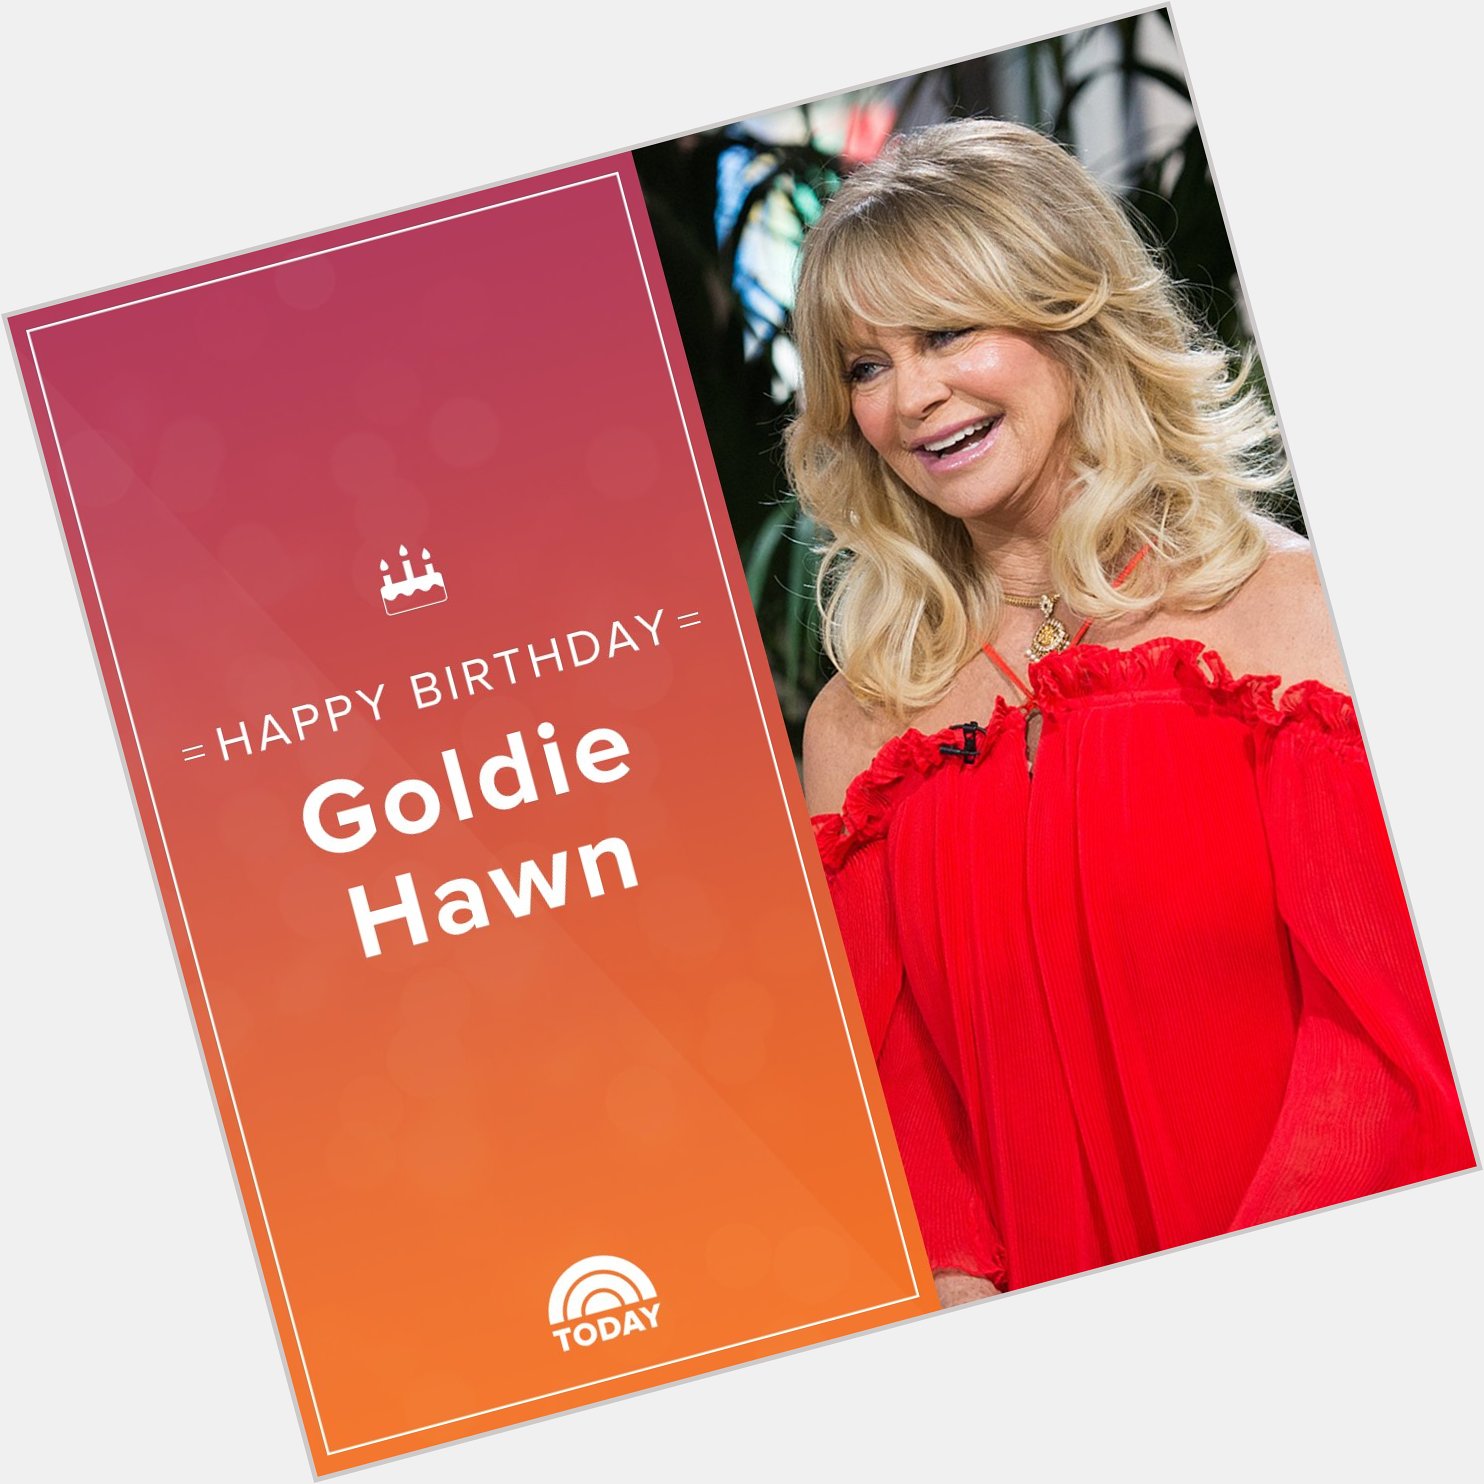 Happy birthday, Goldie Hawn! 